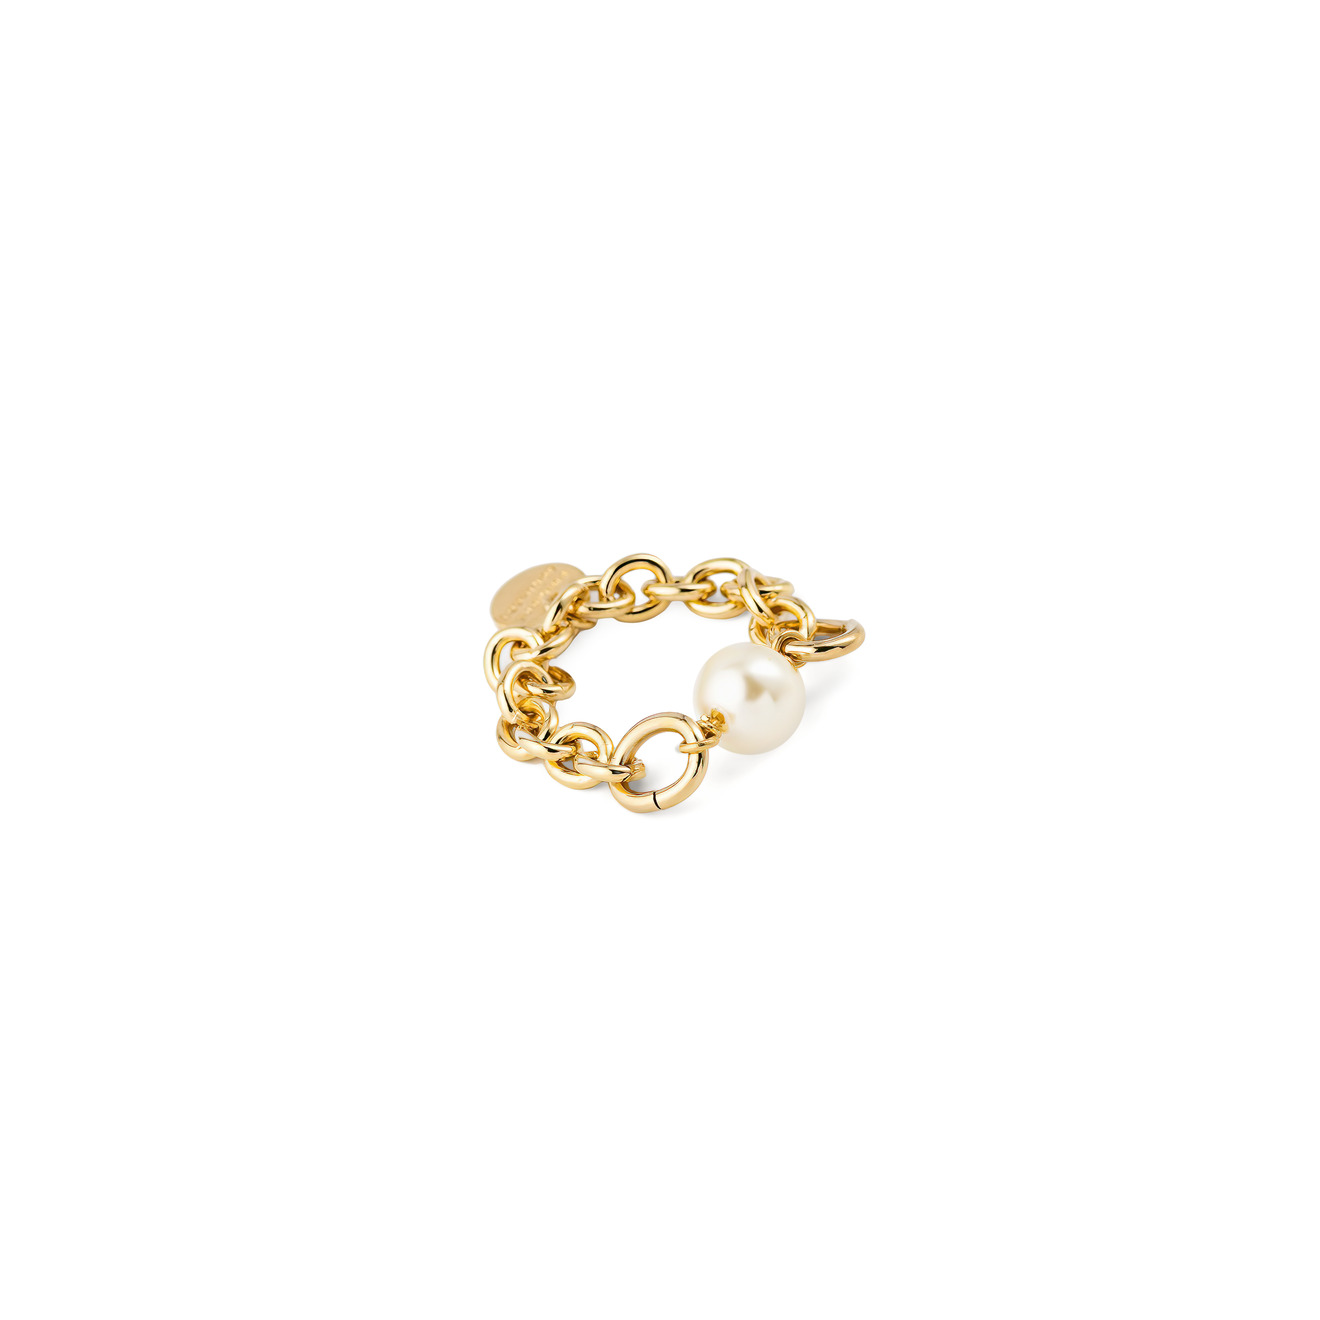 Philippe Audibert Позолоченное кольцо-цепь aitana с жемчужиной philippe audibert многослойное позолоченное колье aitana